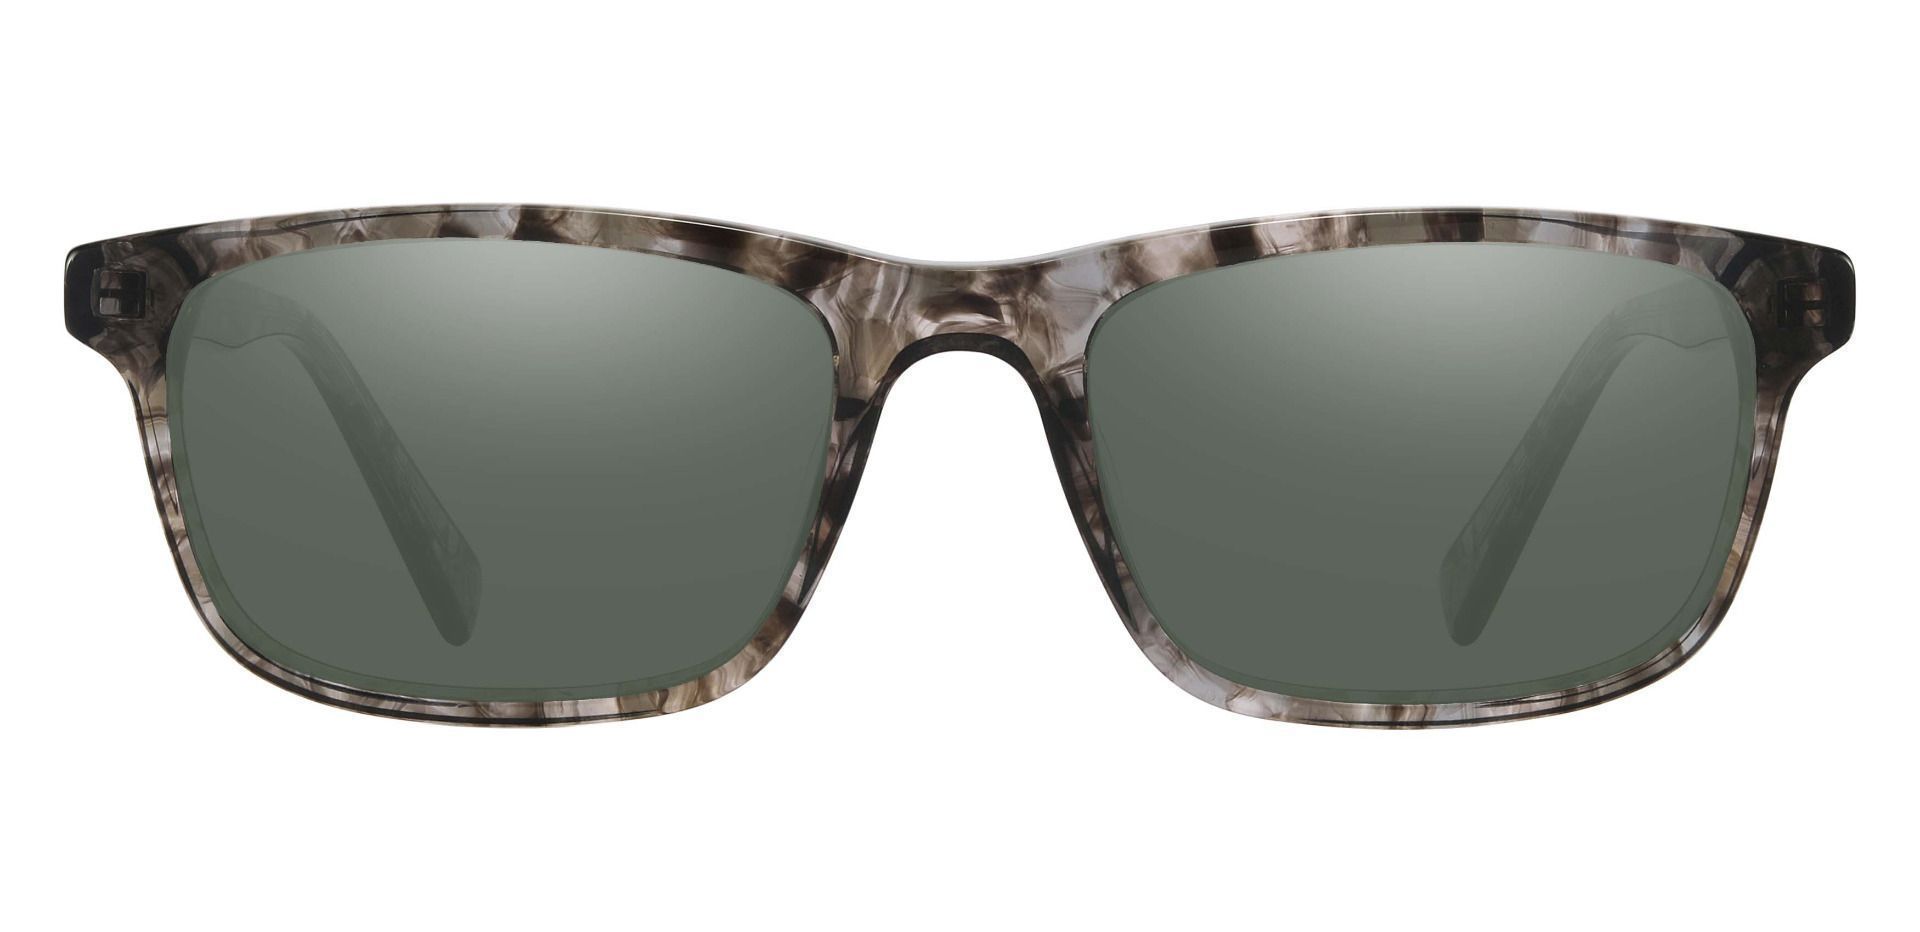 Munich Rectangle Prescription Sunglasses - Gray Frame With Green Lenses